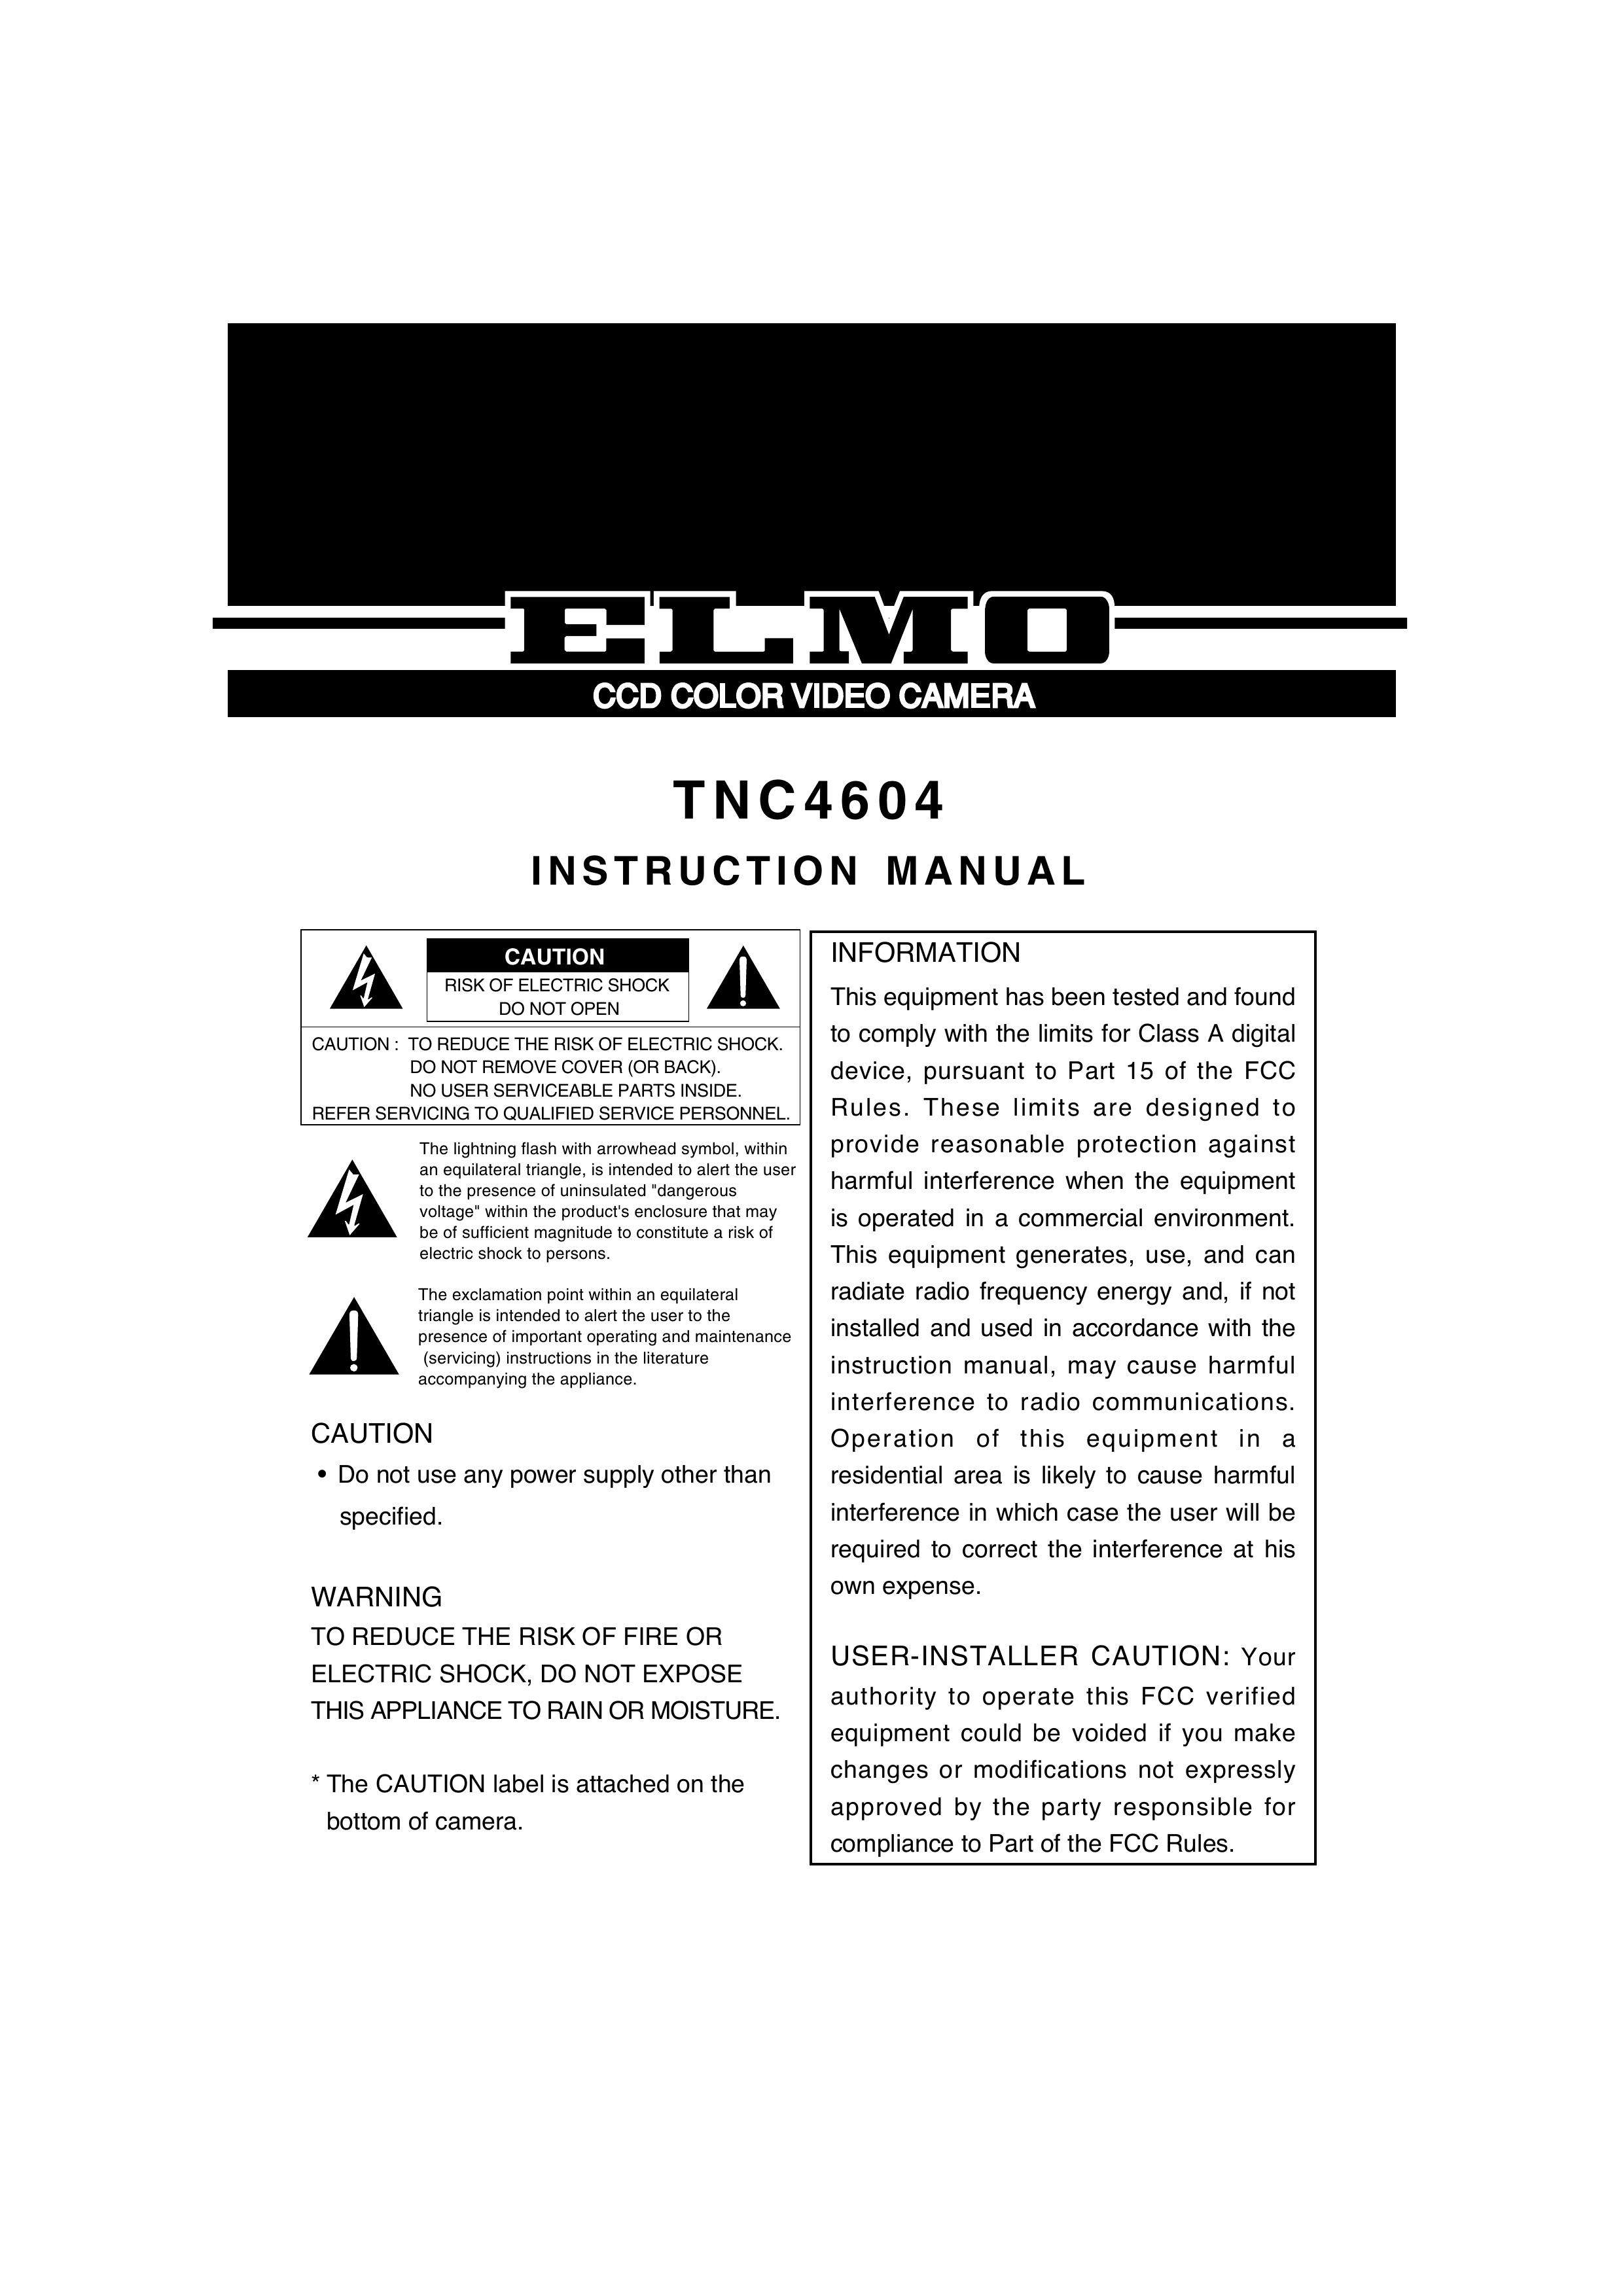 Elmo TNC4604 Camcorder User Manual